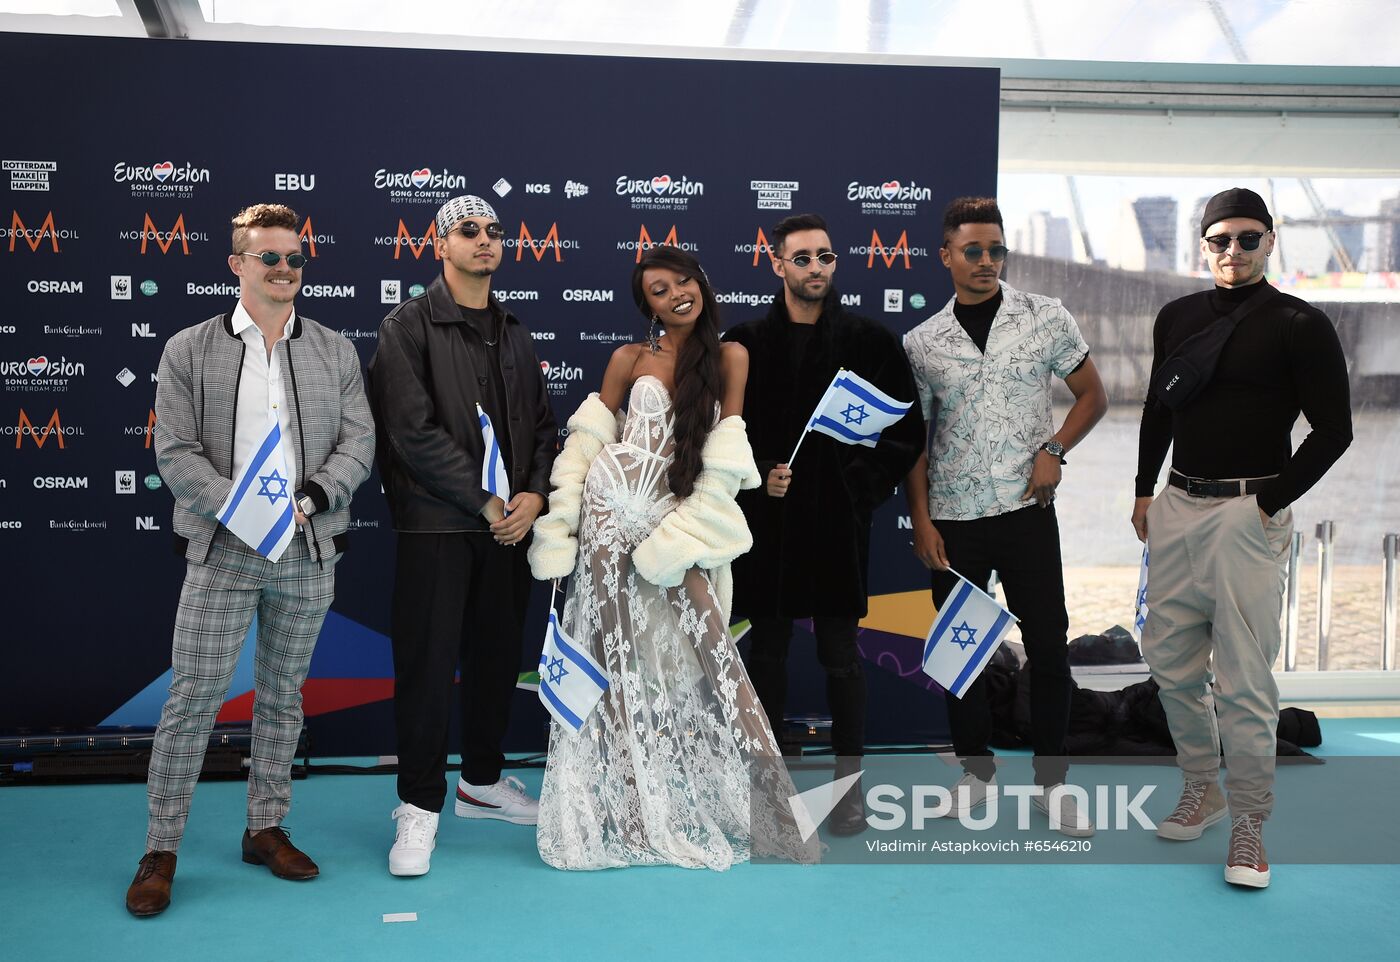 Netherlands Eurovision Opening Ceremony